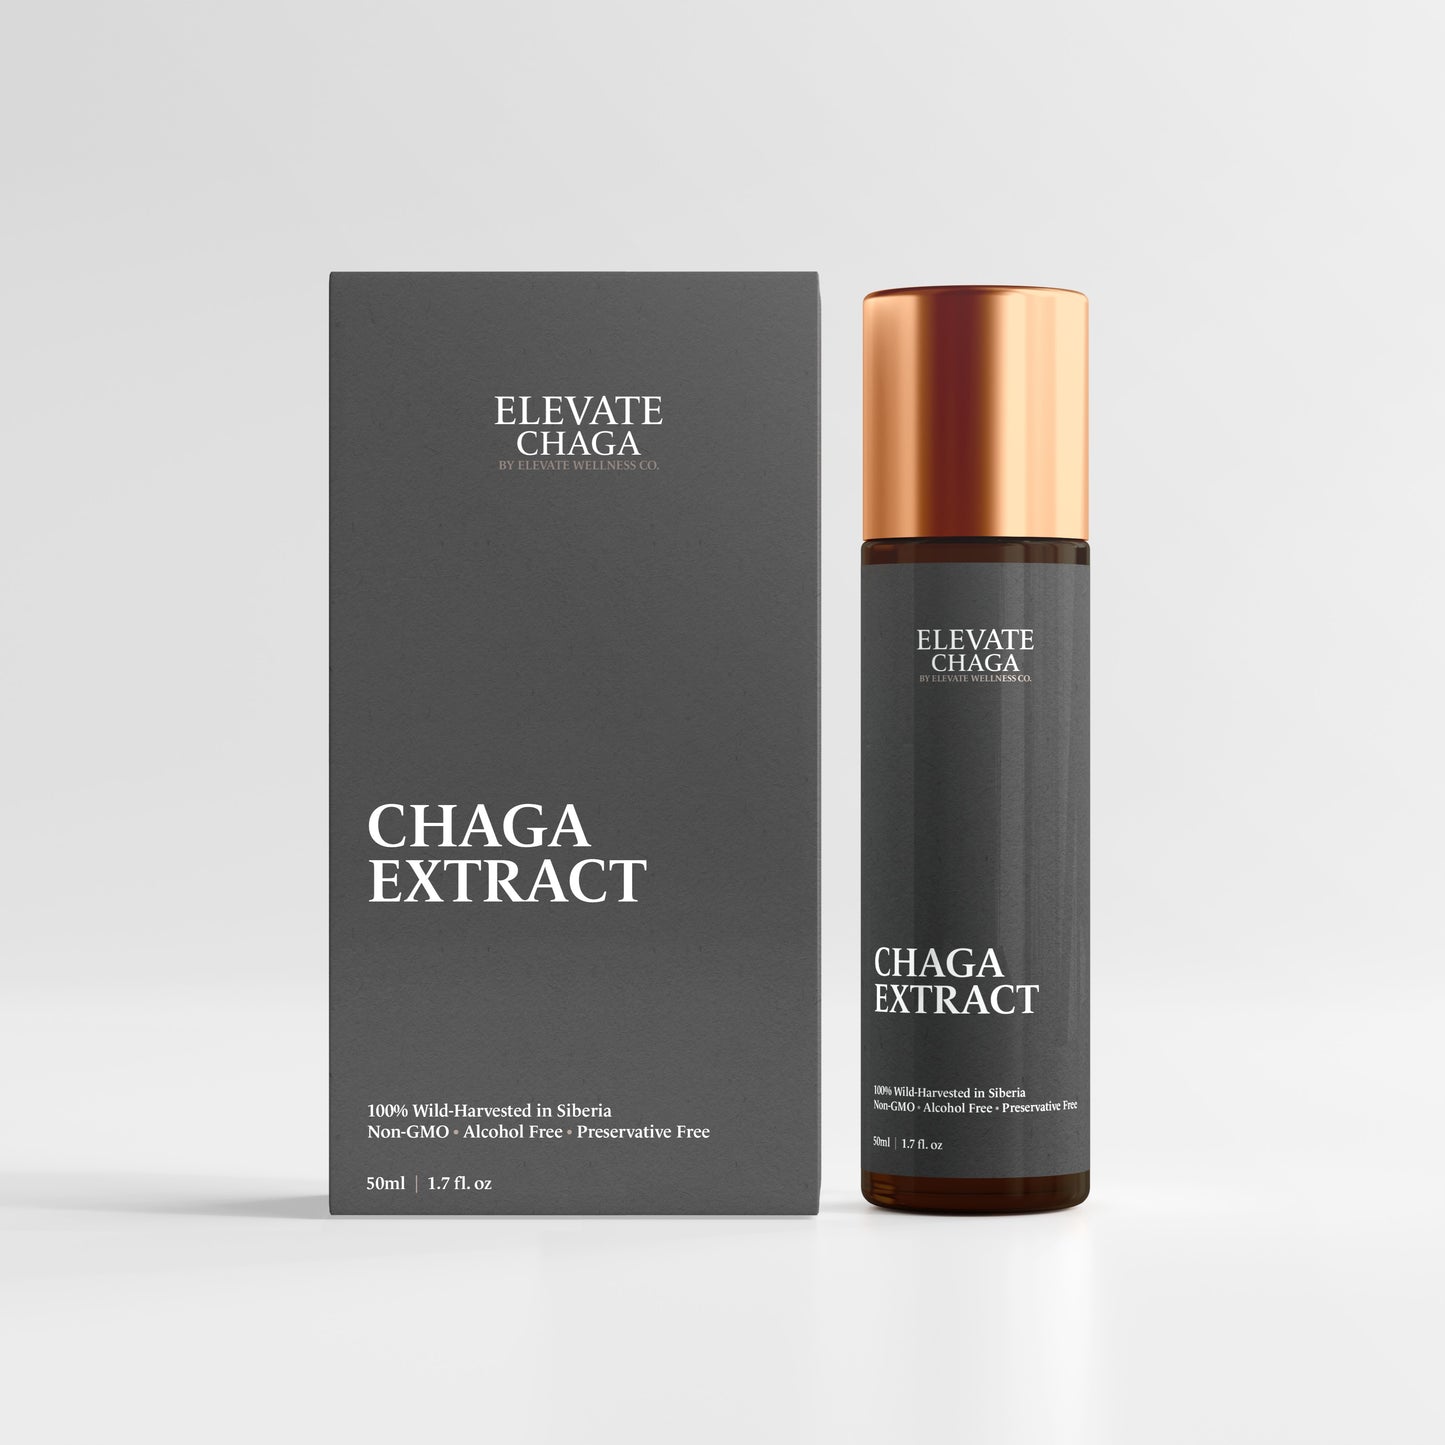 Chaga Extract